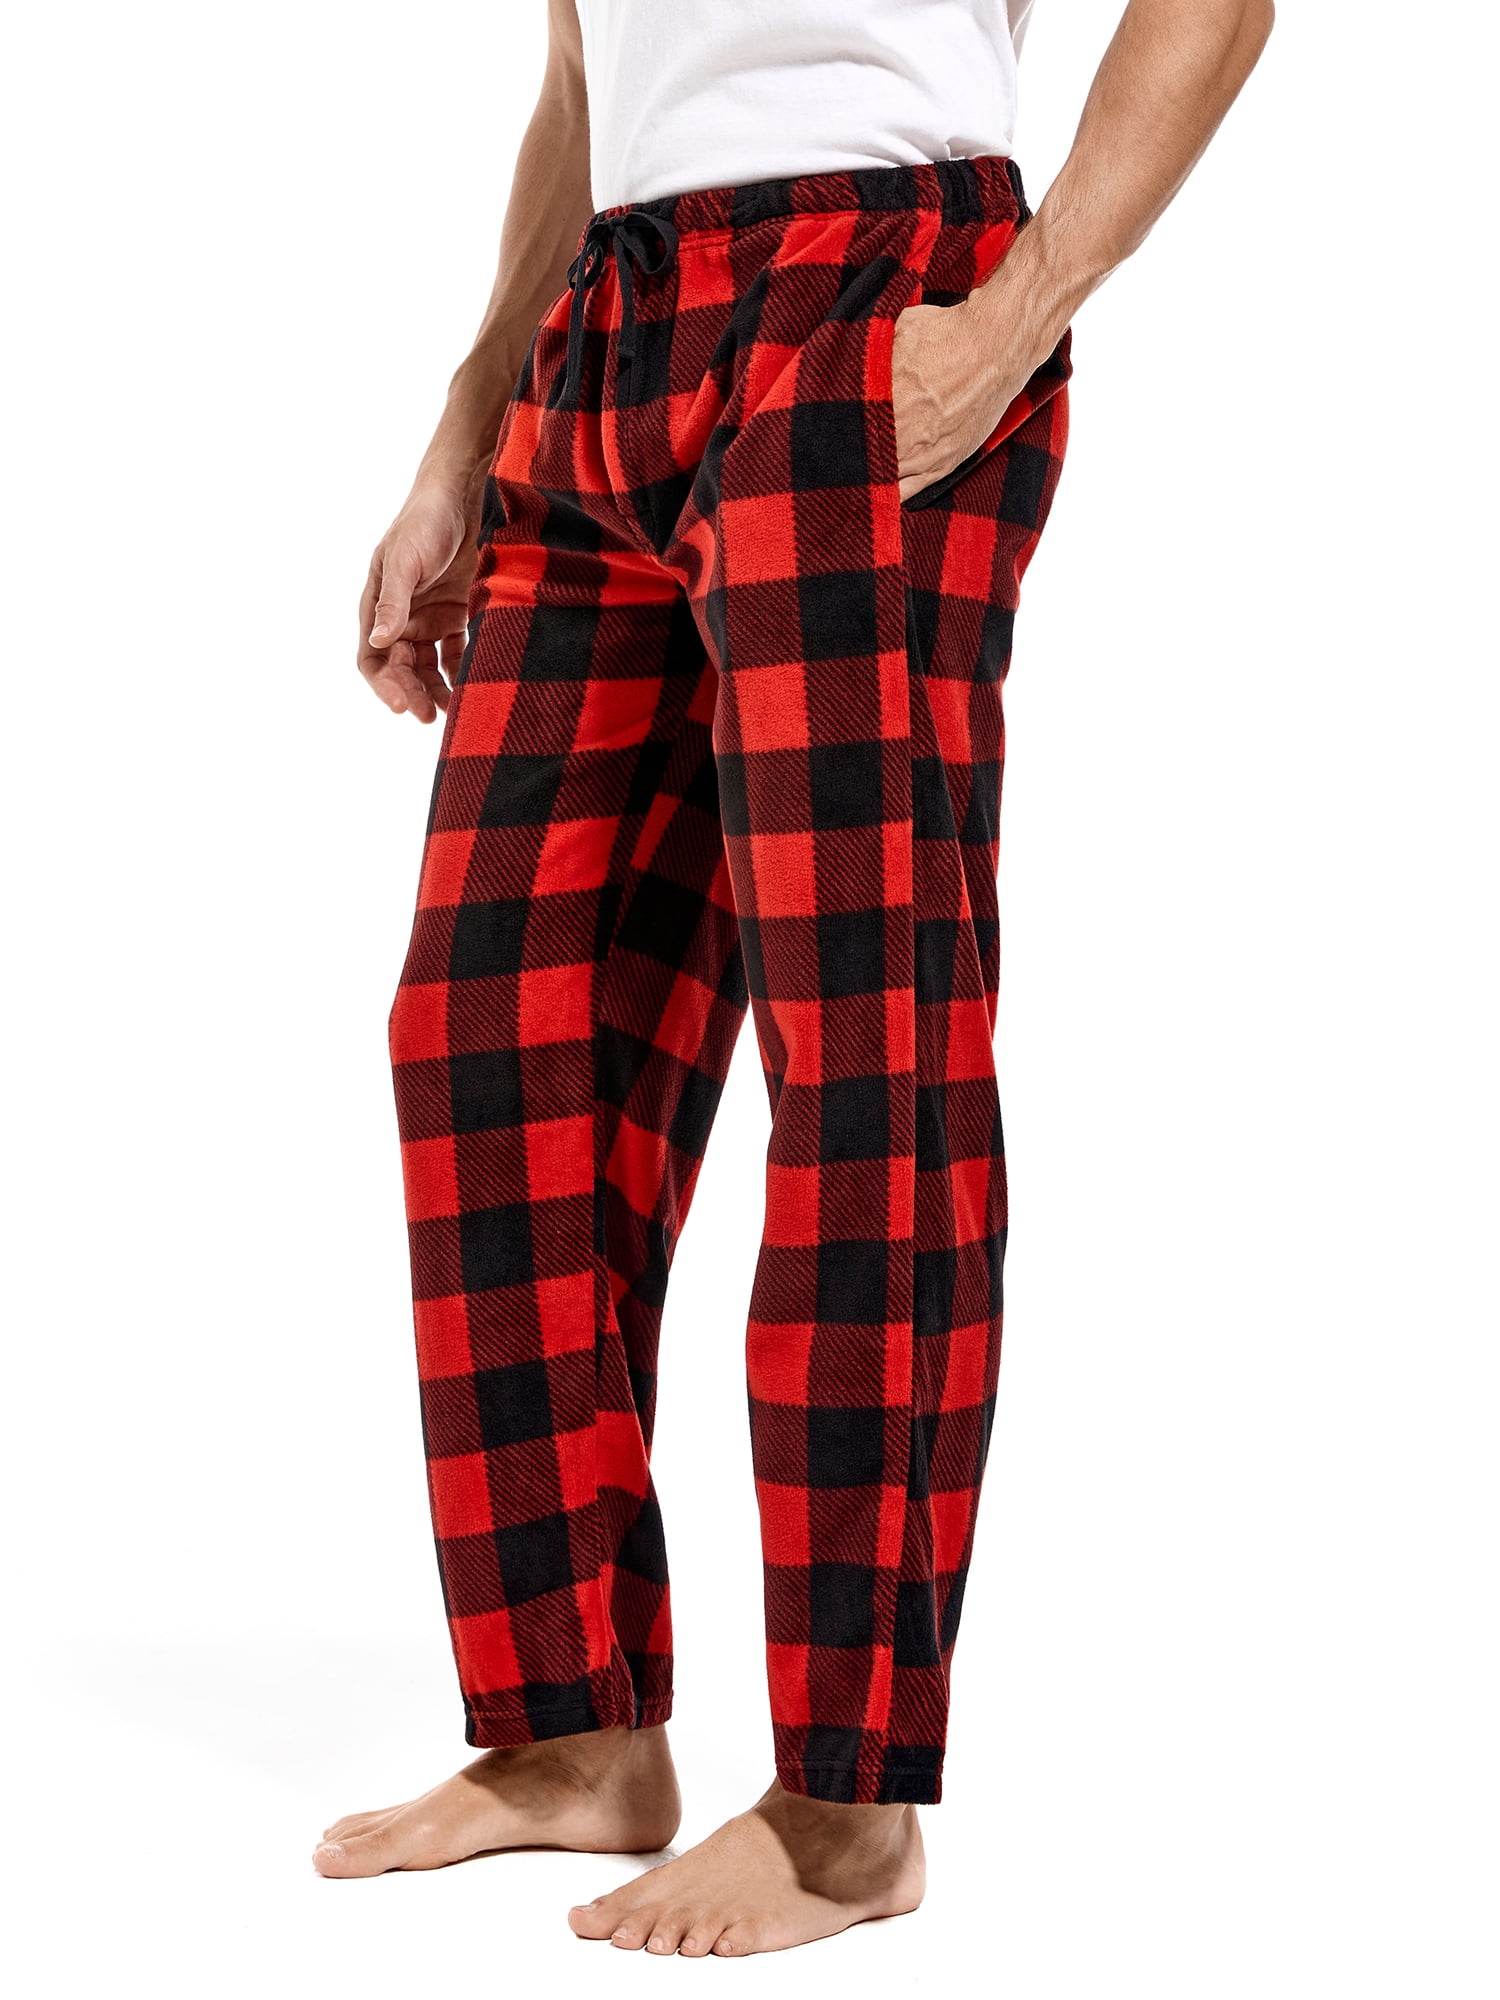 DG Hill Mens Sleep Pants, Fleece Pajama Bottoms with Pockets, Plaid or Camo